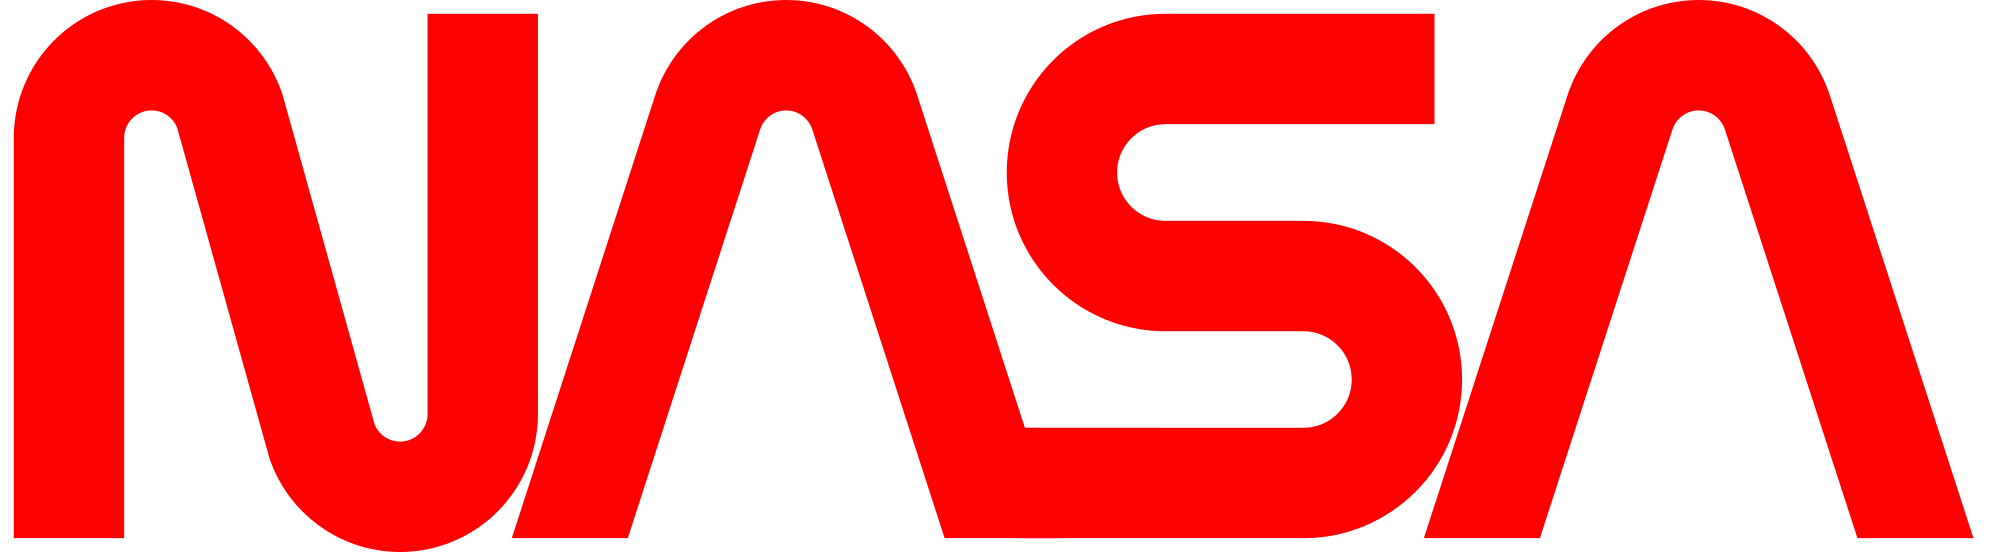 File:NASA Worm logo - Wikimedia Commons